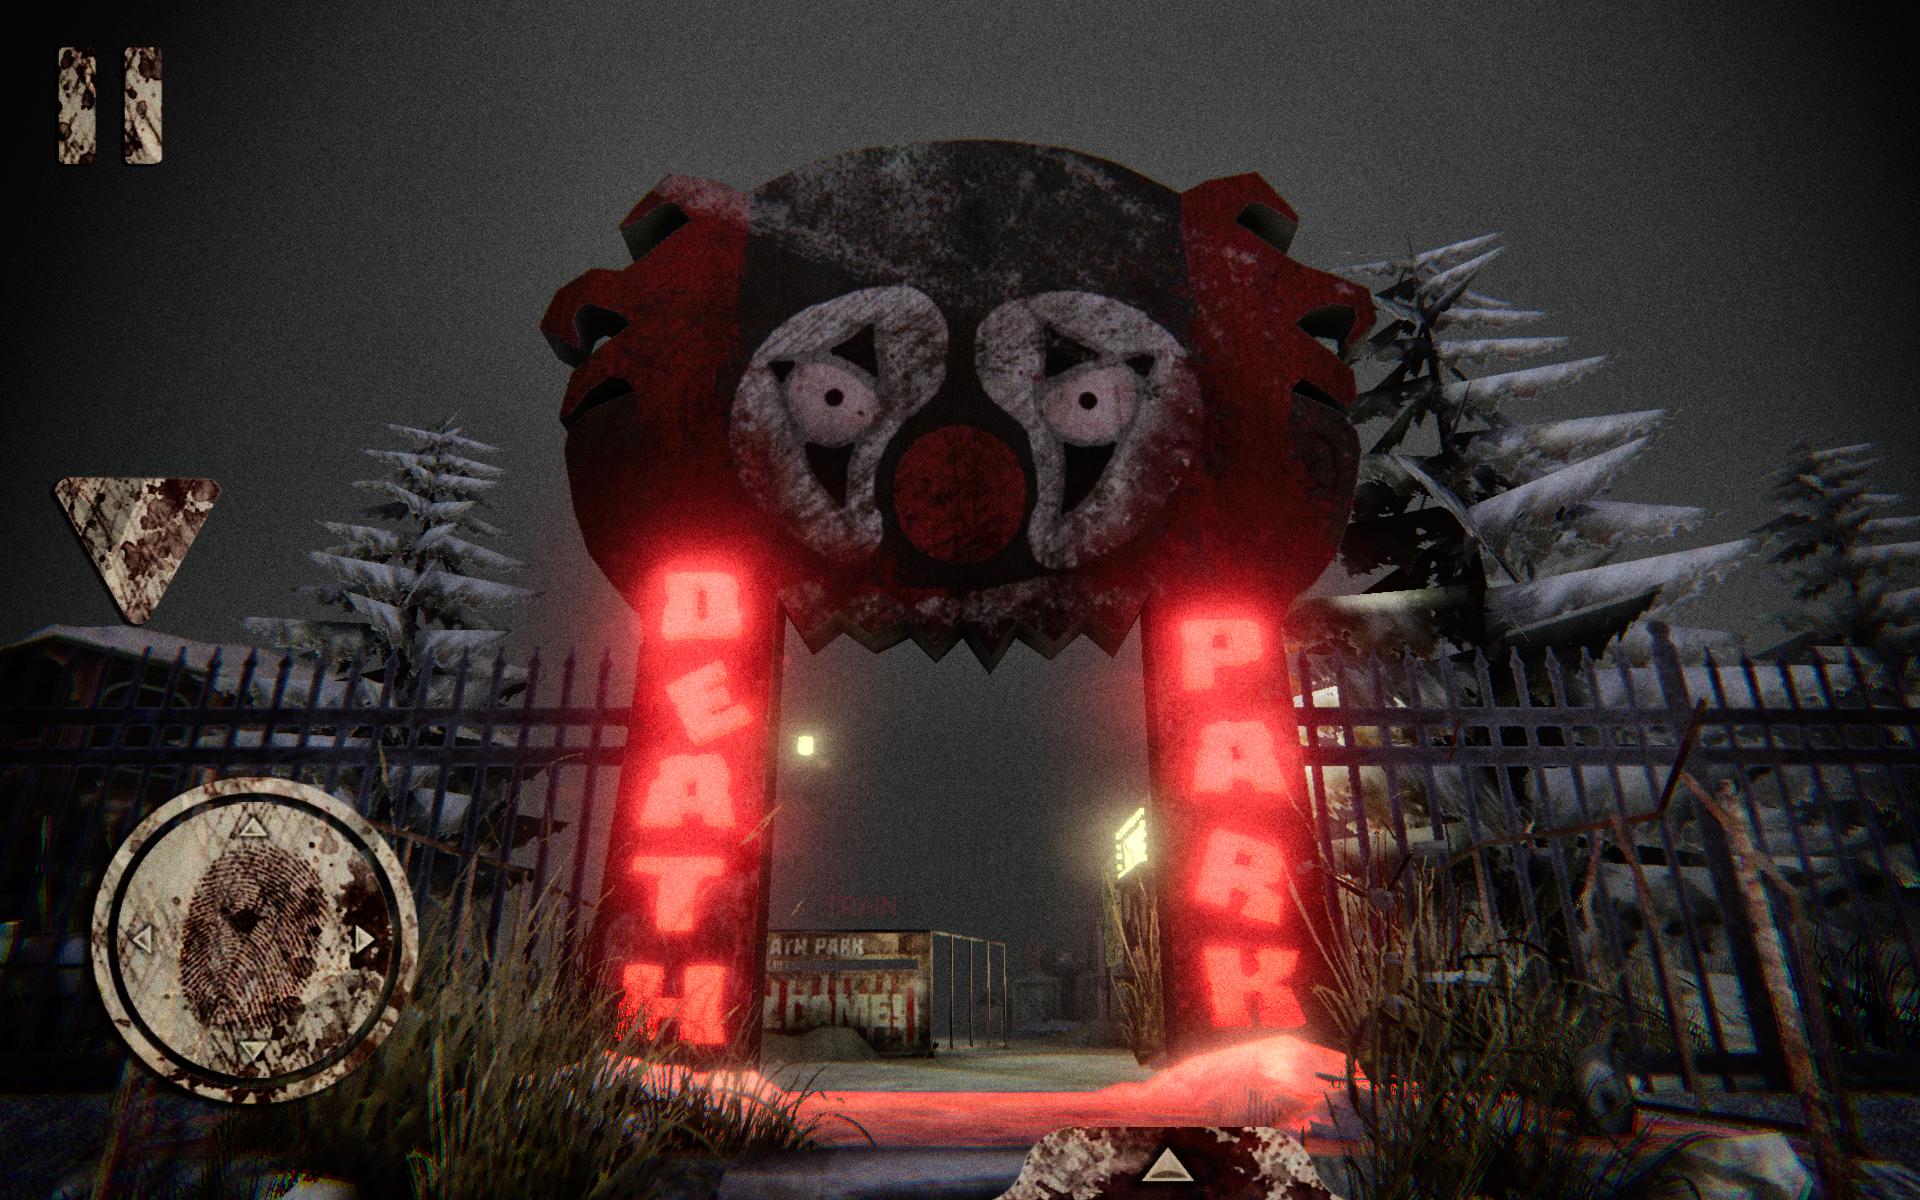 Death Park Scary Clown Survival Horror Game 1.6.0 Screenshot 17